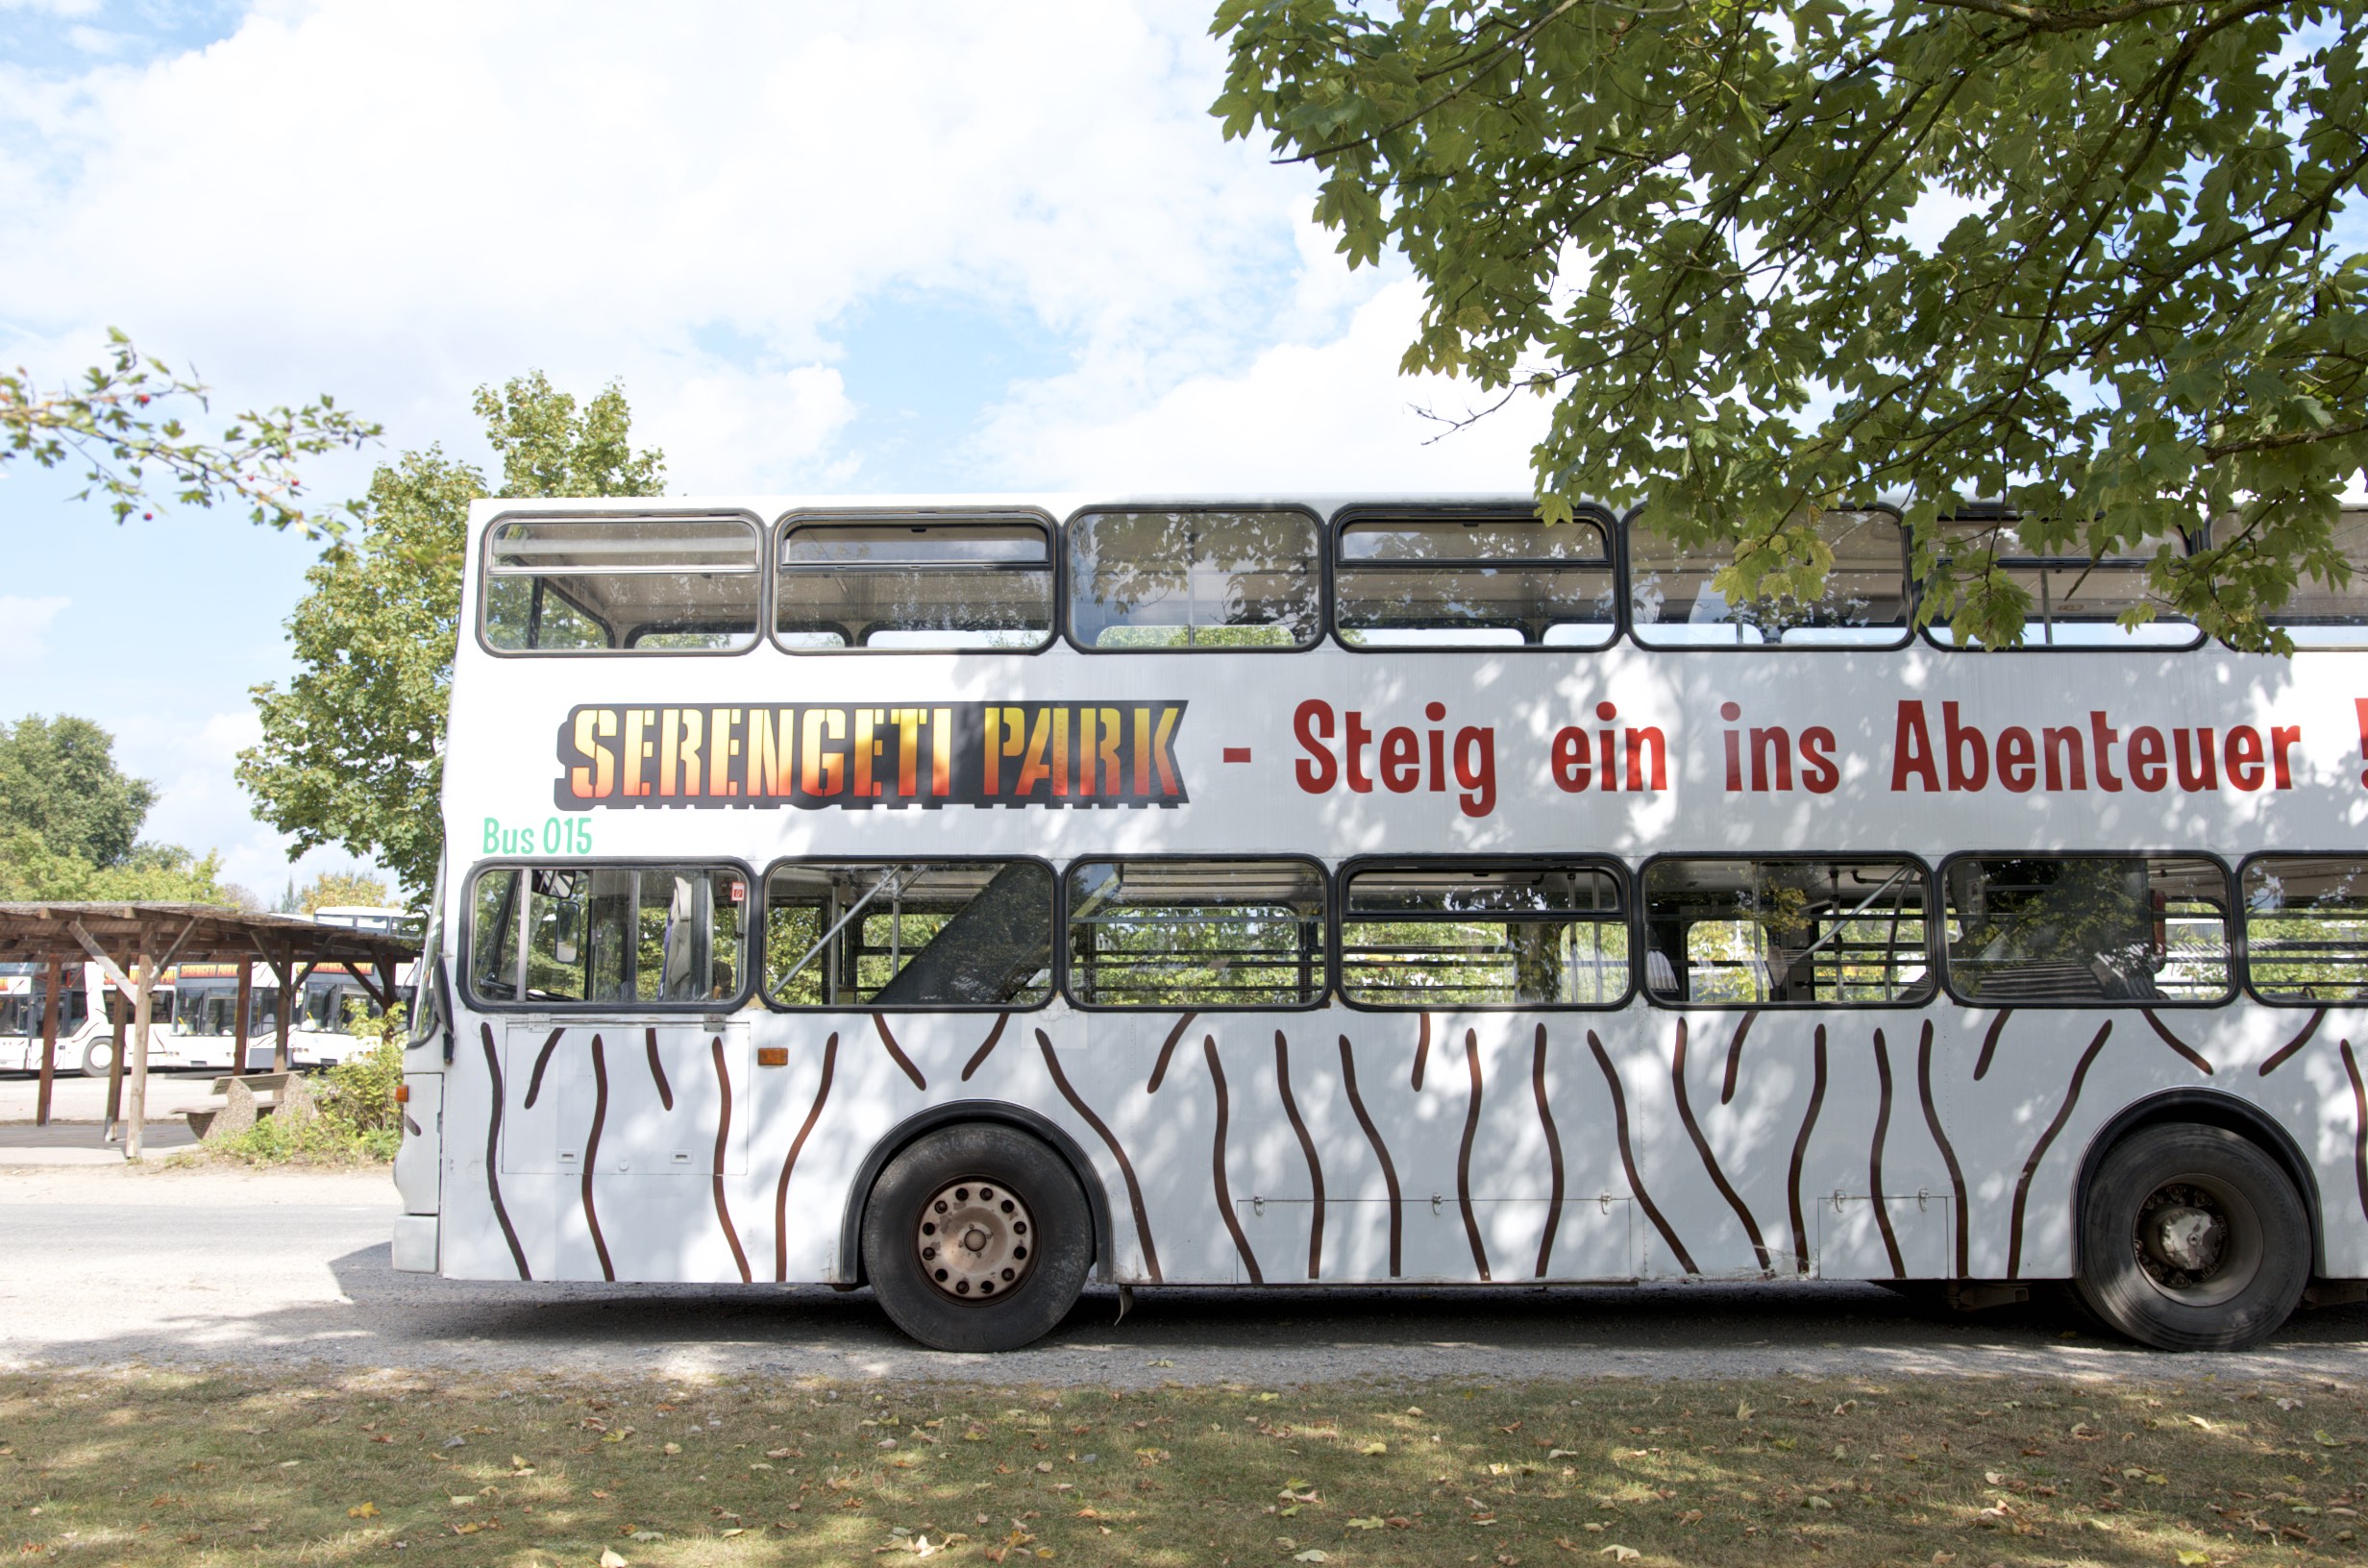 Bus Tour im Serengeti Park Hodenhagen